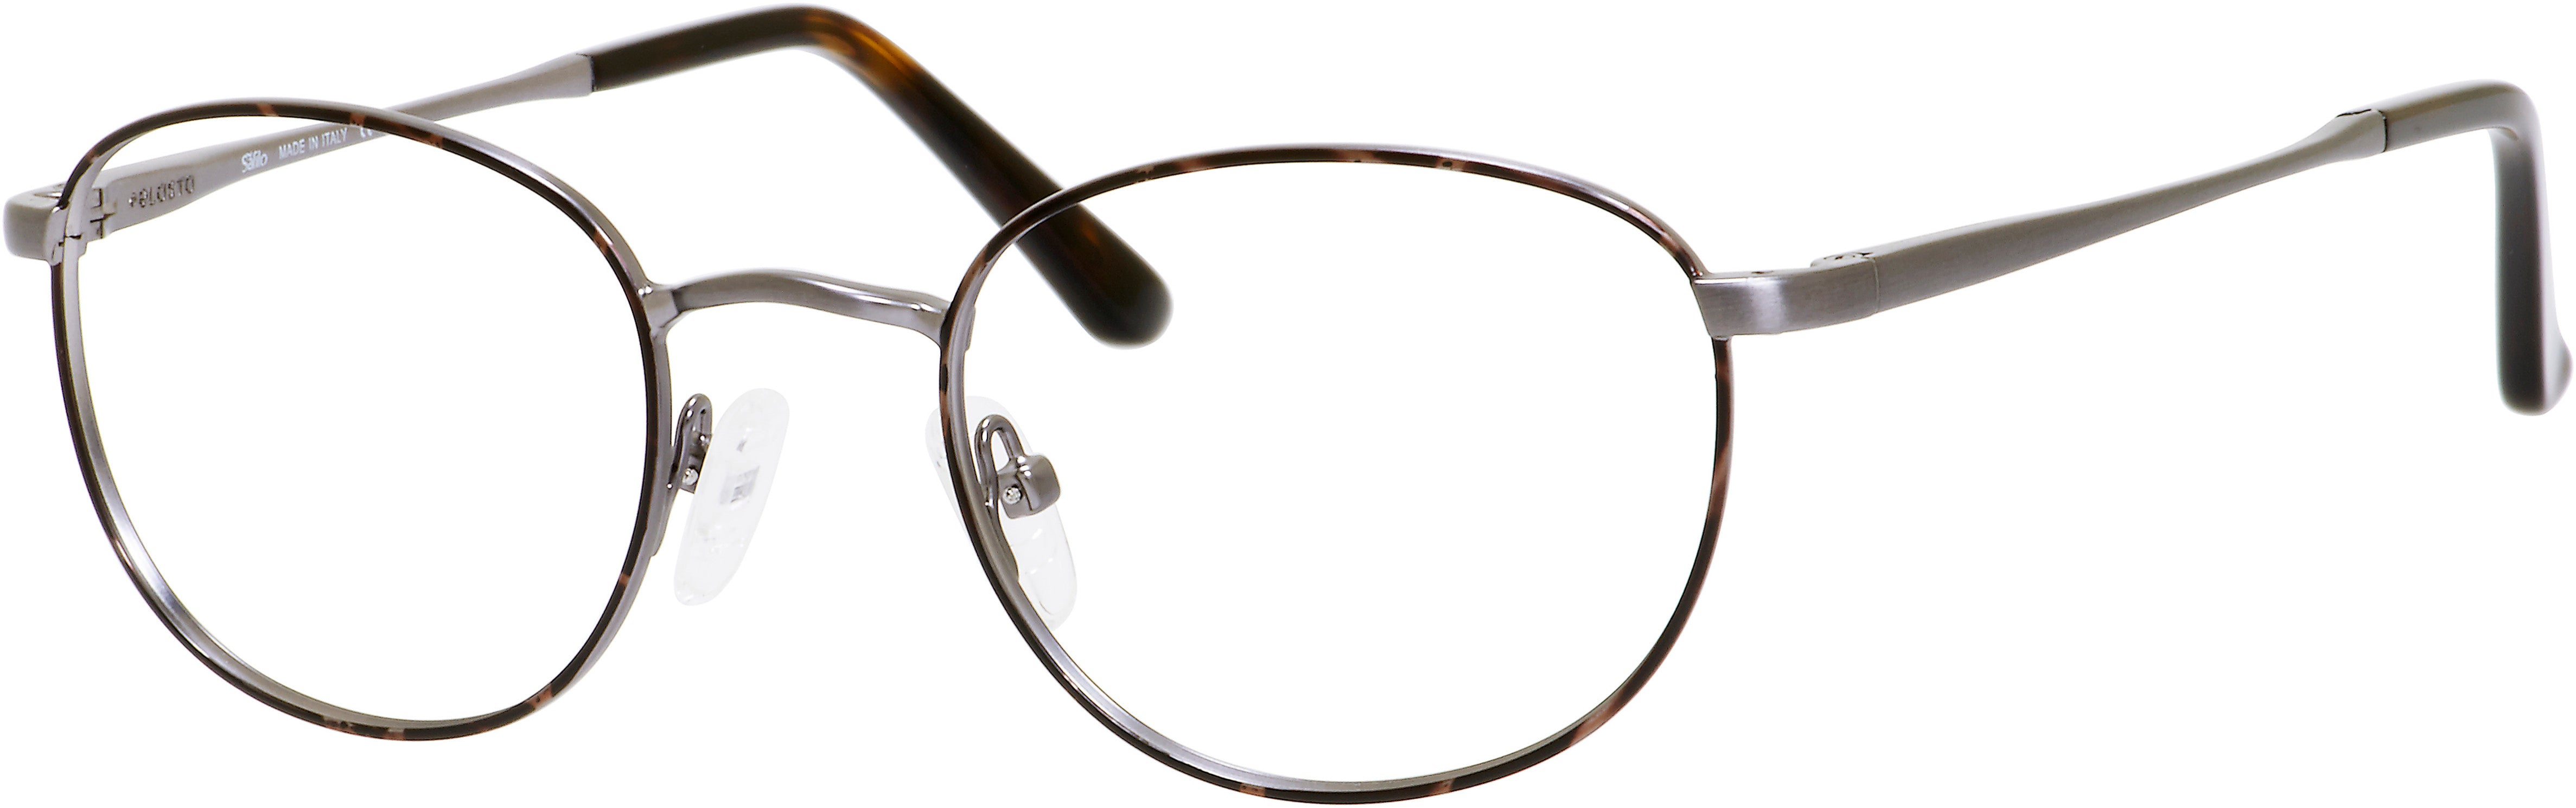  Elasta 7209 Oval Modified Eyeglasses 01C6-01C6  Havana Brown Ruthenium (00 Demo Lens)